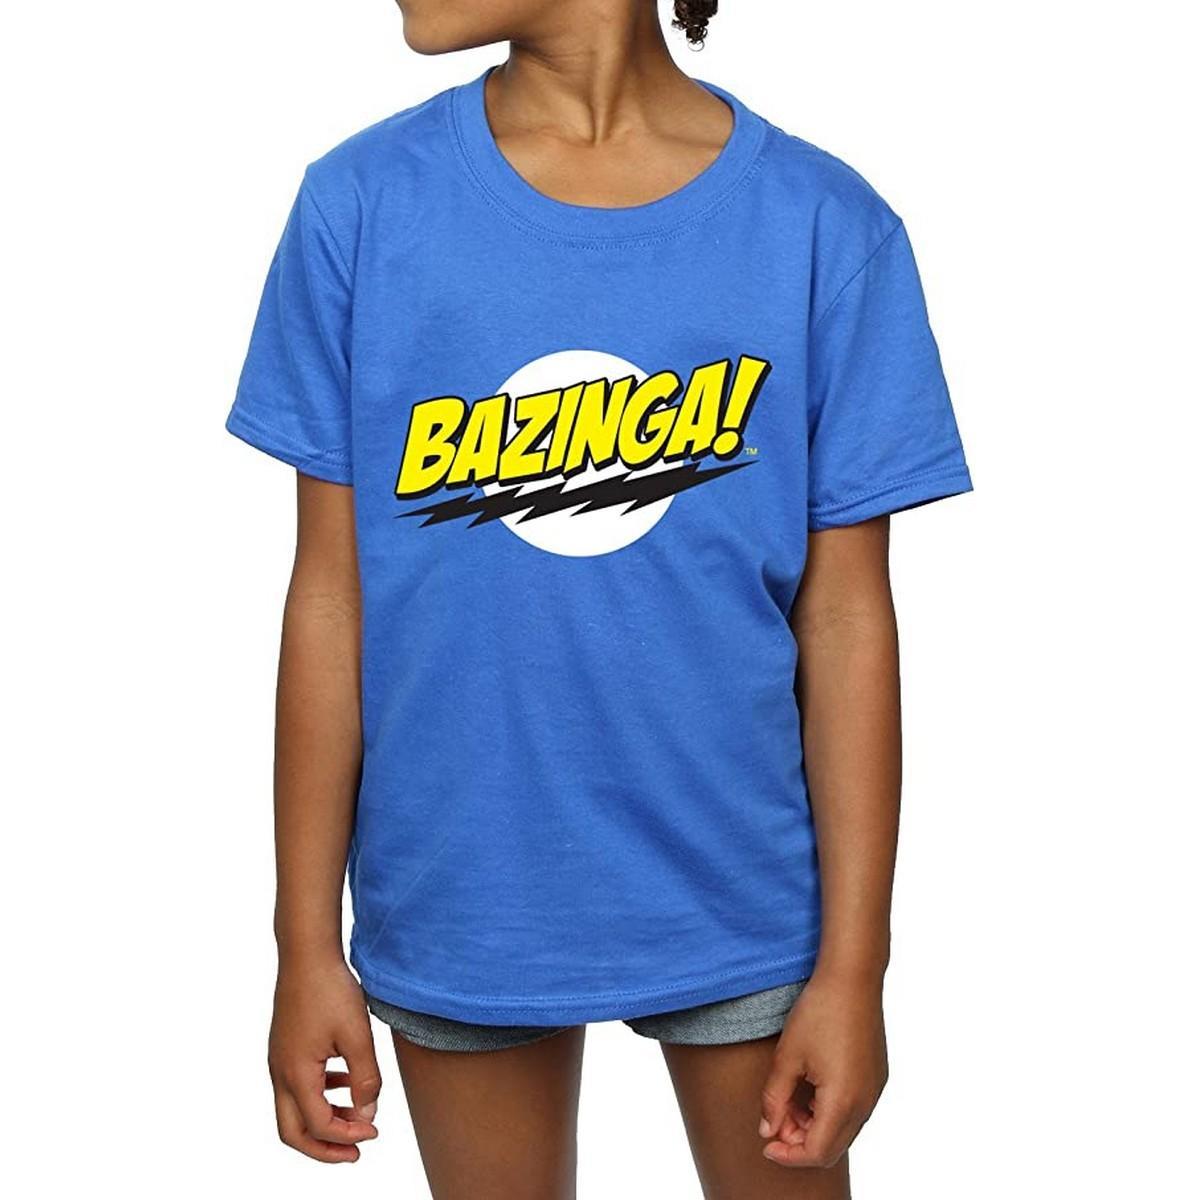 The Big Bang Theory Girls Bazinga Cotton T-Shirt (Royal Blue) (7-8 Years)